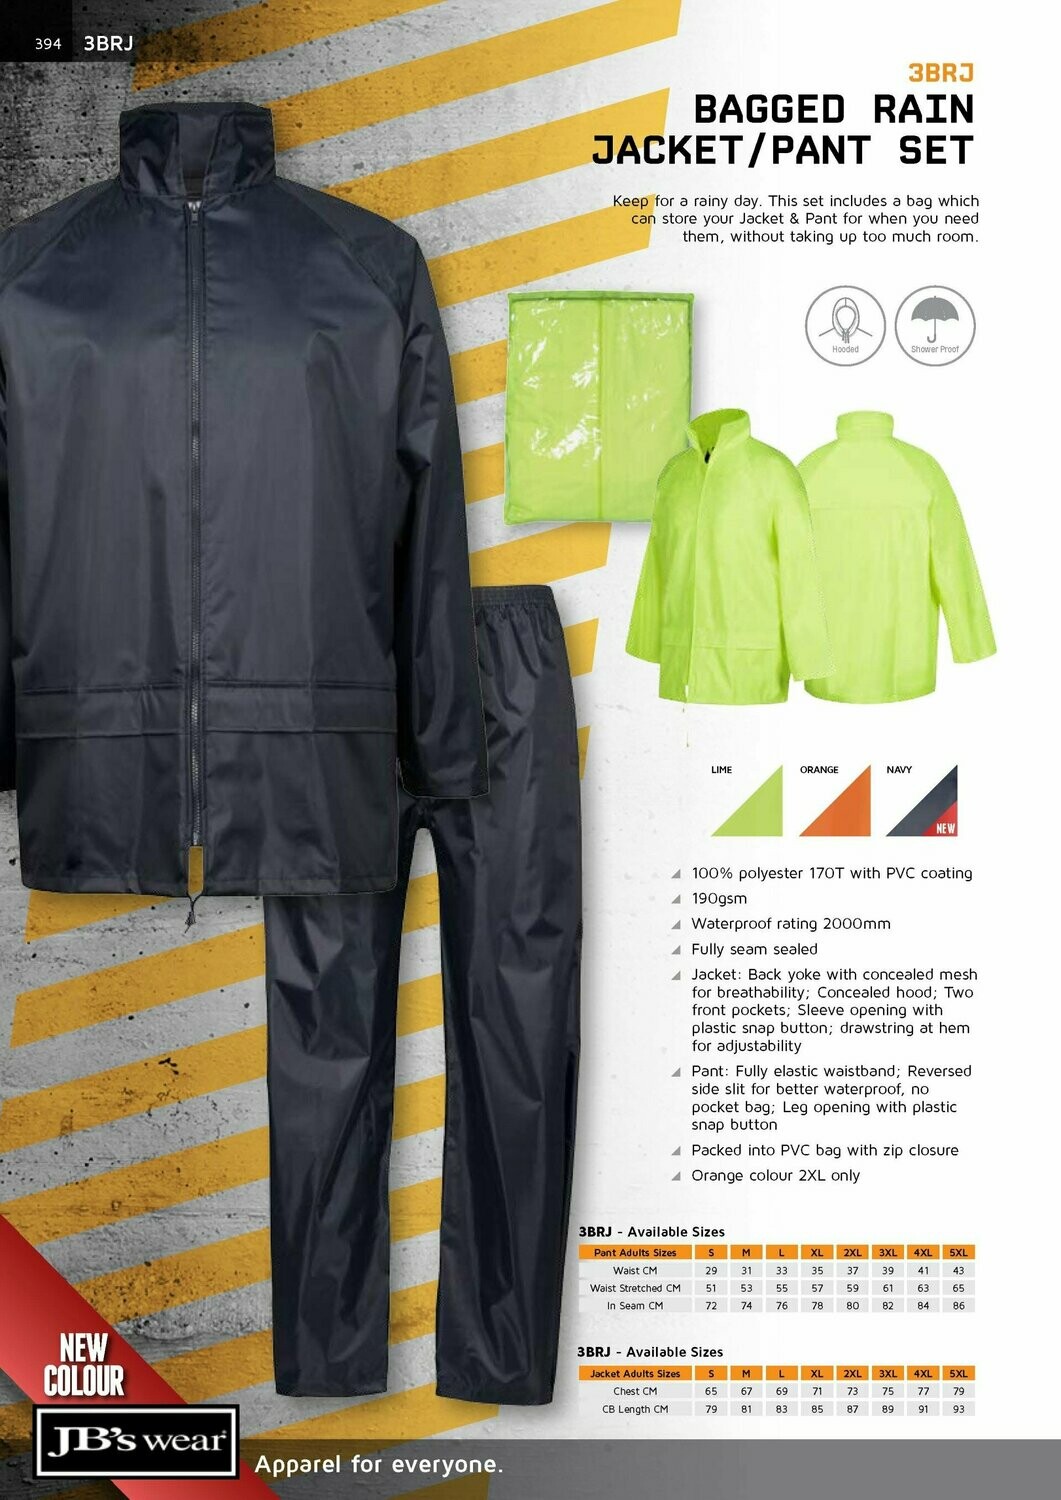 Jb's wear Bagged Rain Coat Jacket Pants Fully Seam sealed PVC Coating Waterproof